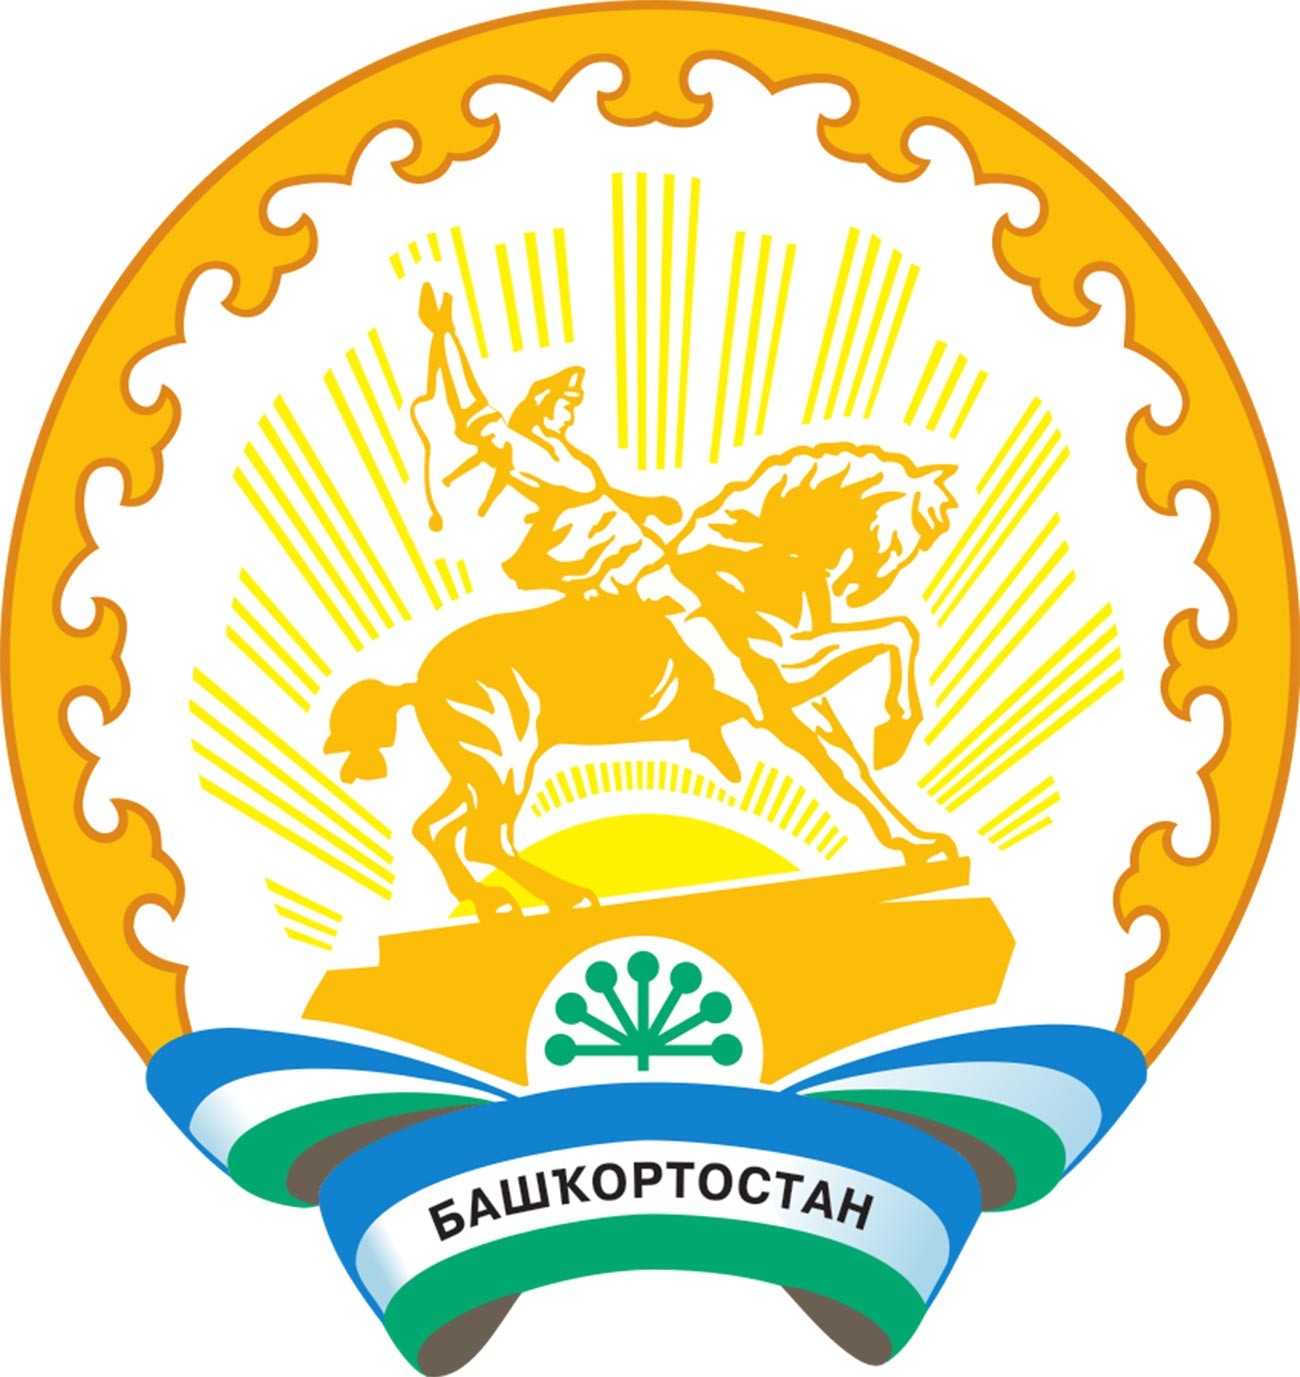 The official emblem of the Republic of Bashkortostan